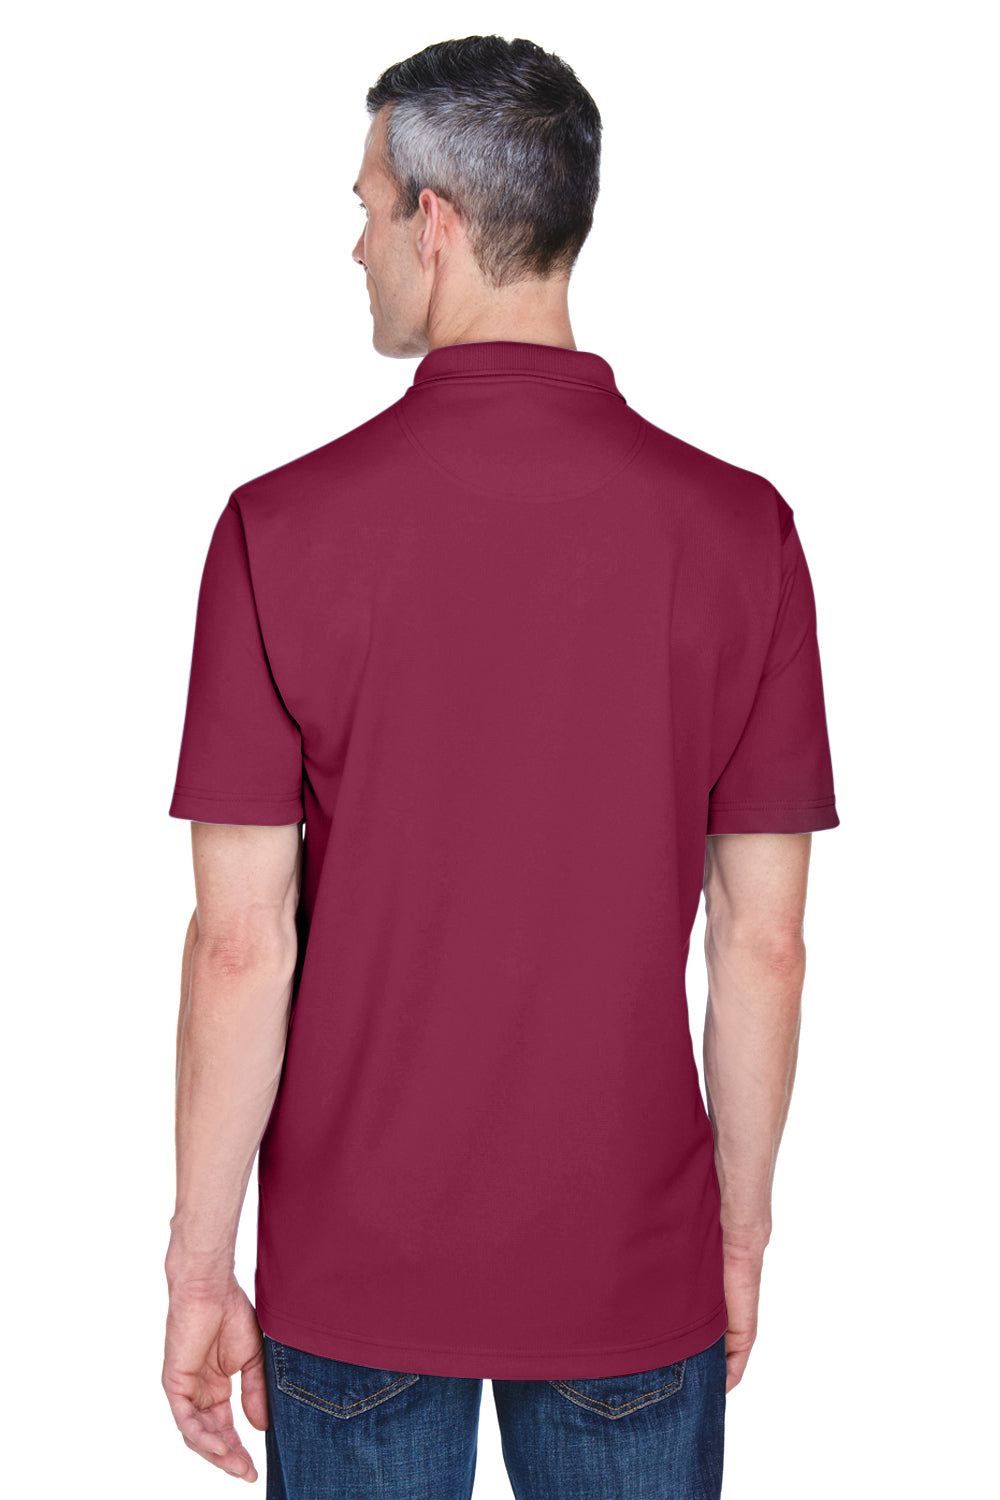 UltraClub 8445 Mens Cool & Dry Performance Moisture Wicking Short Sleeve Polo Shirt Maroon Back